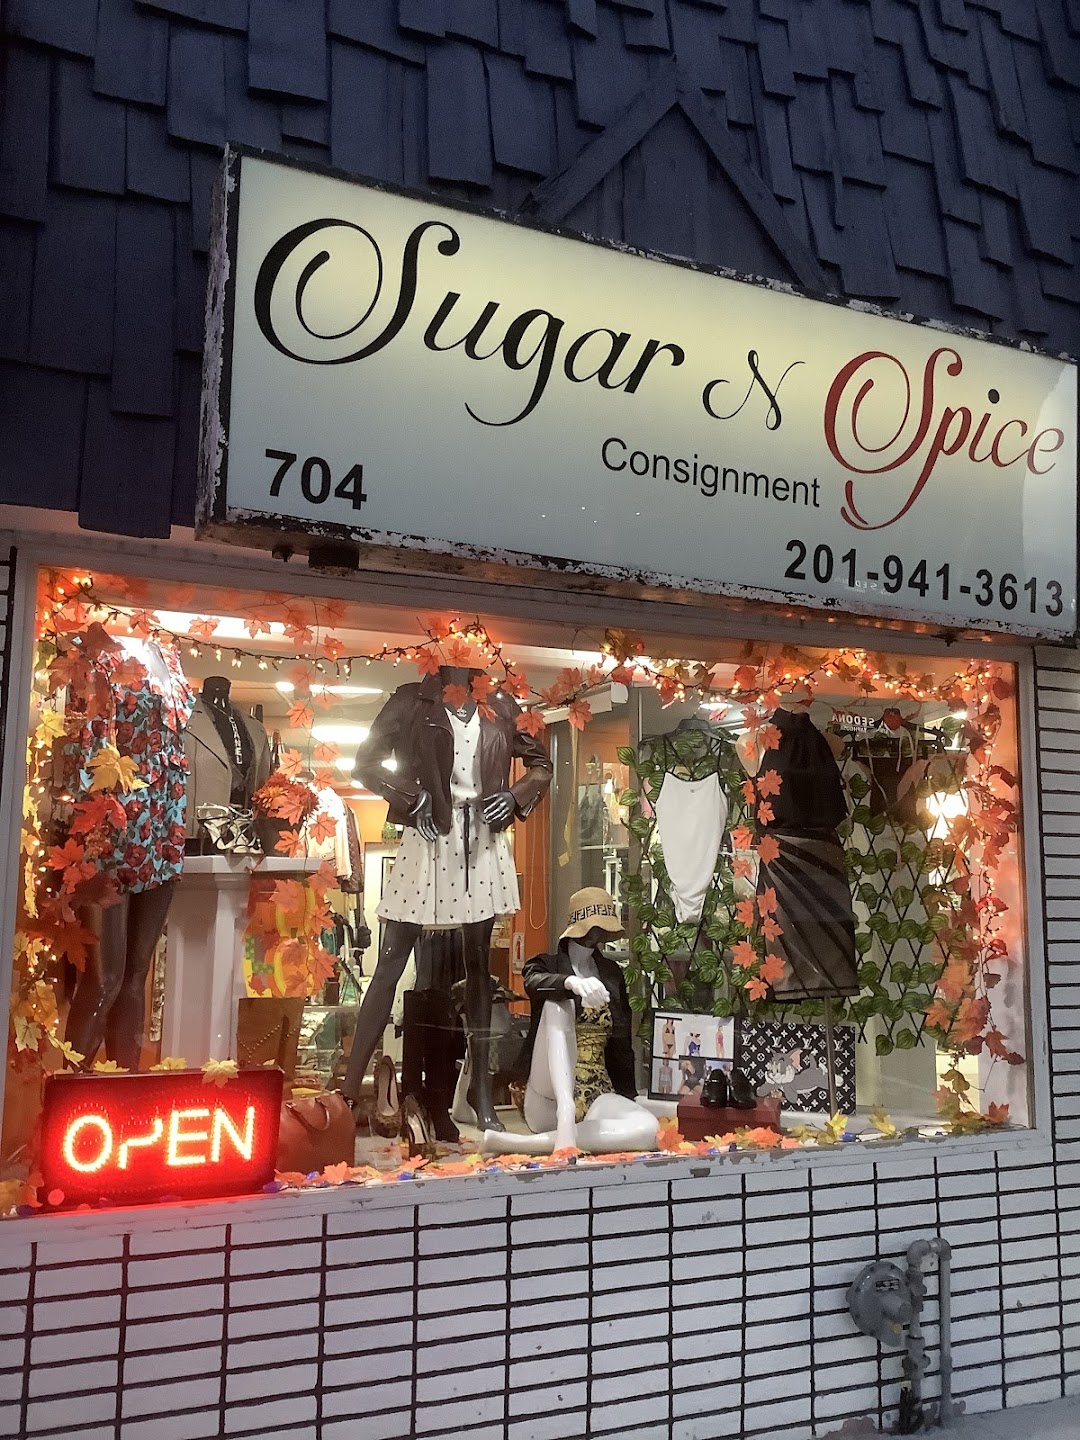 Sugar & Spice Consignment Store